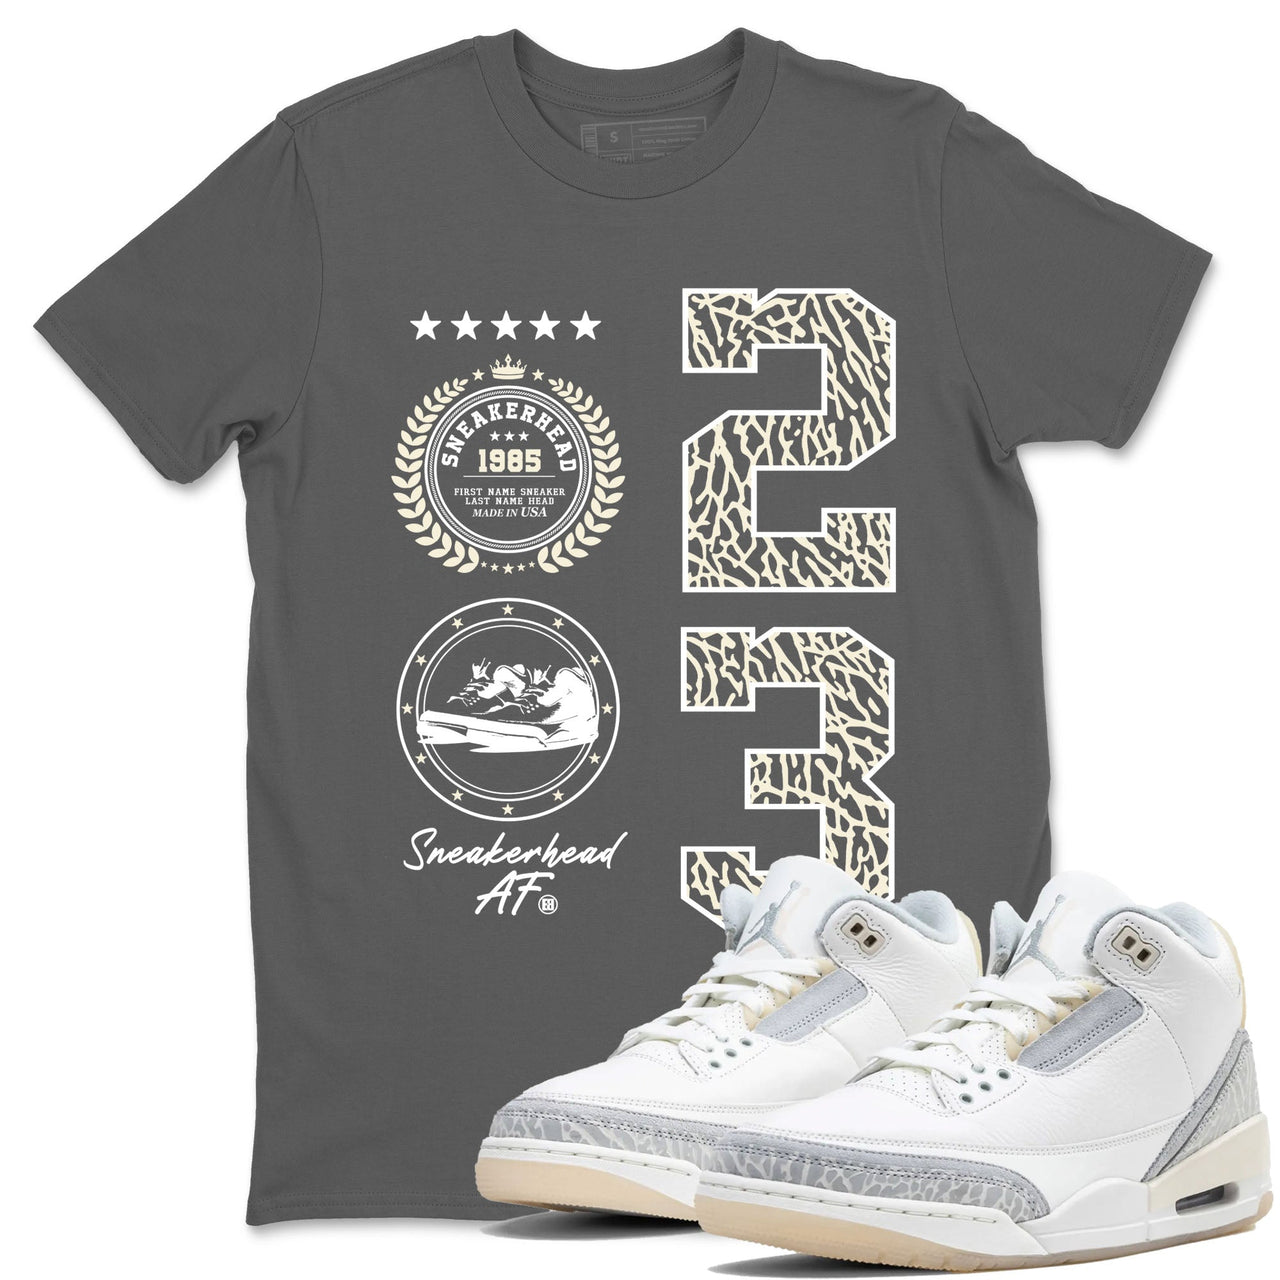 Sneaker Emblem sneaker match tees to Ivory 3s street fashion brand for shirts to match Jordans SNRT Sneaker Tees Air Jordan 3 Craft 'Ivory' unisex t-shirt Cool Grey 1 unisex shirt